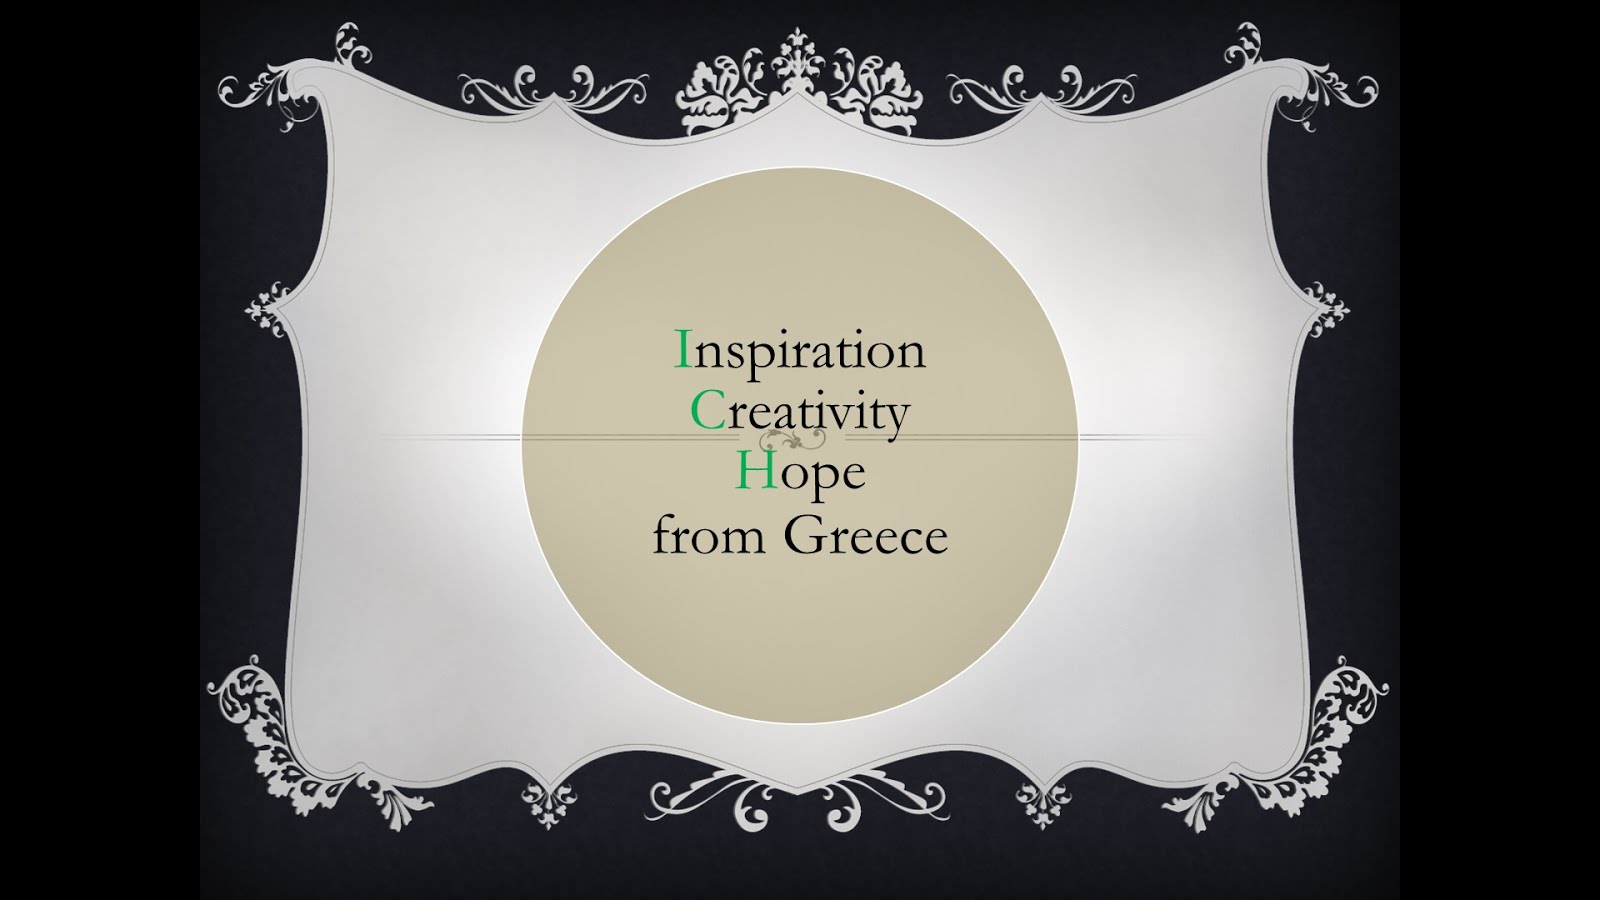 Inspiration - Creativity - Hope from Greece